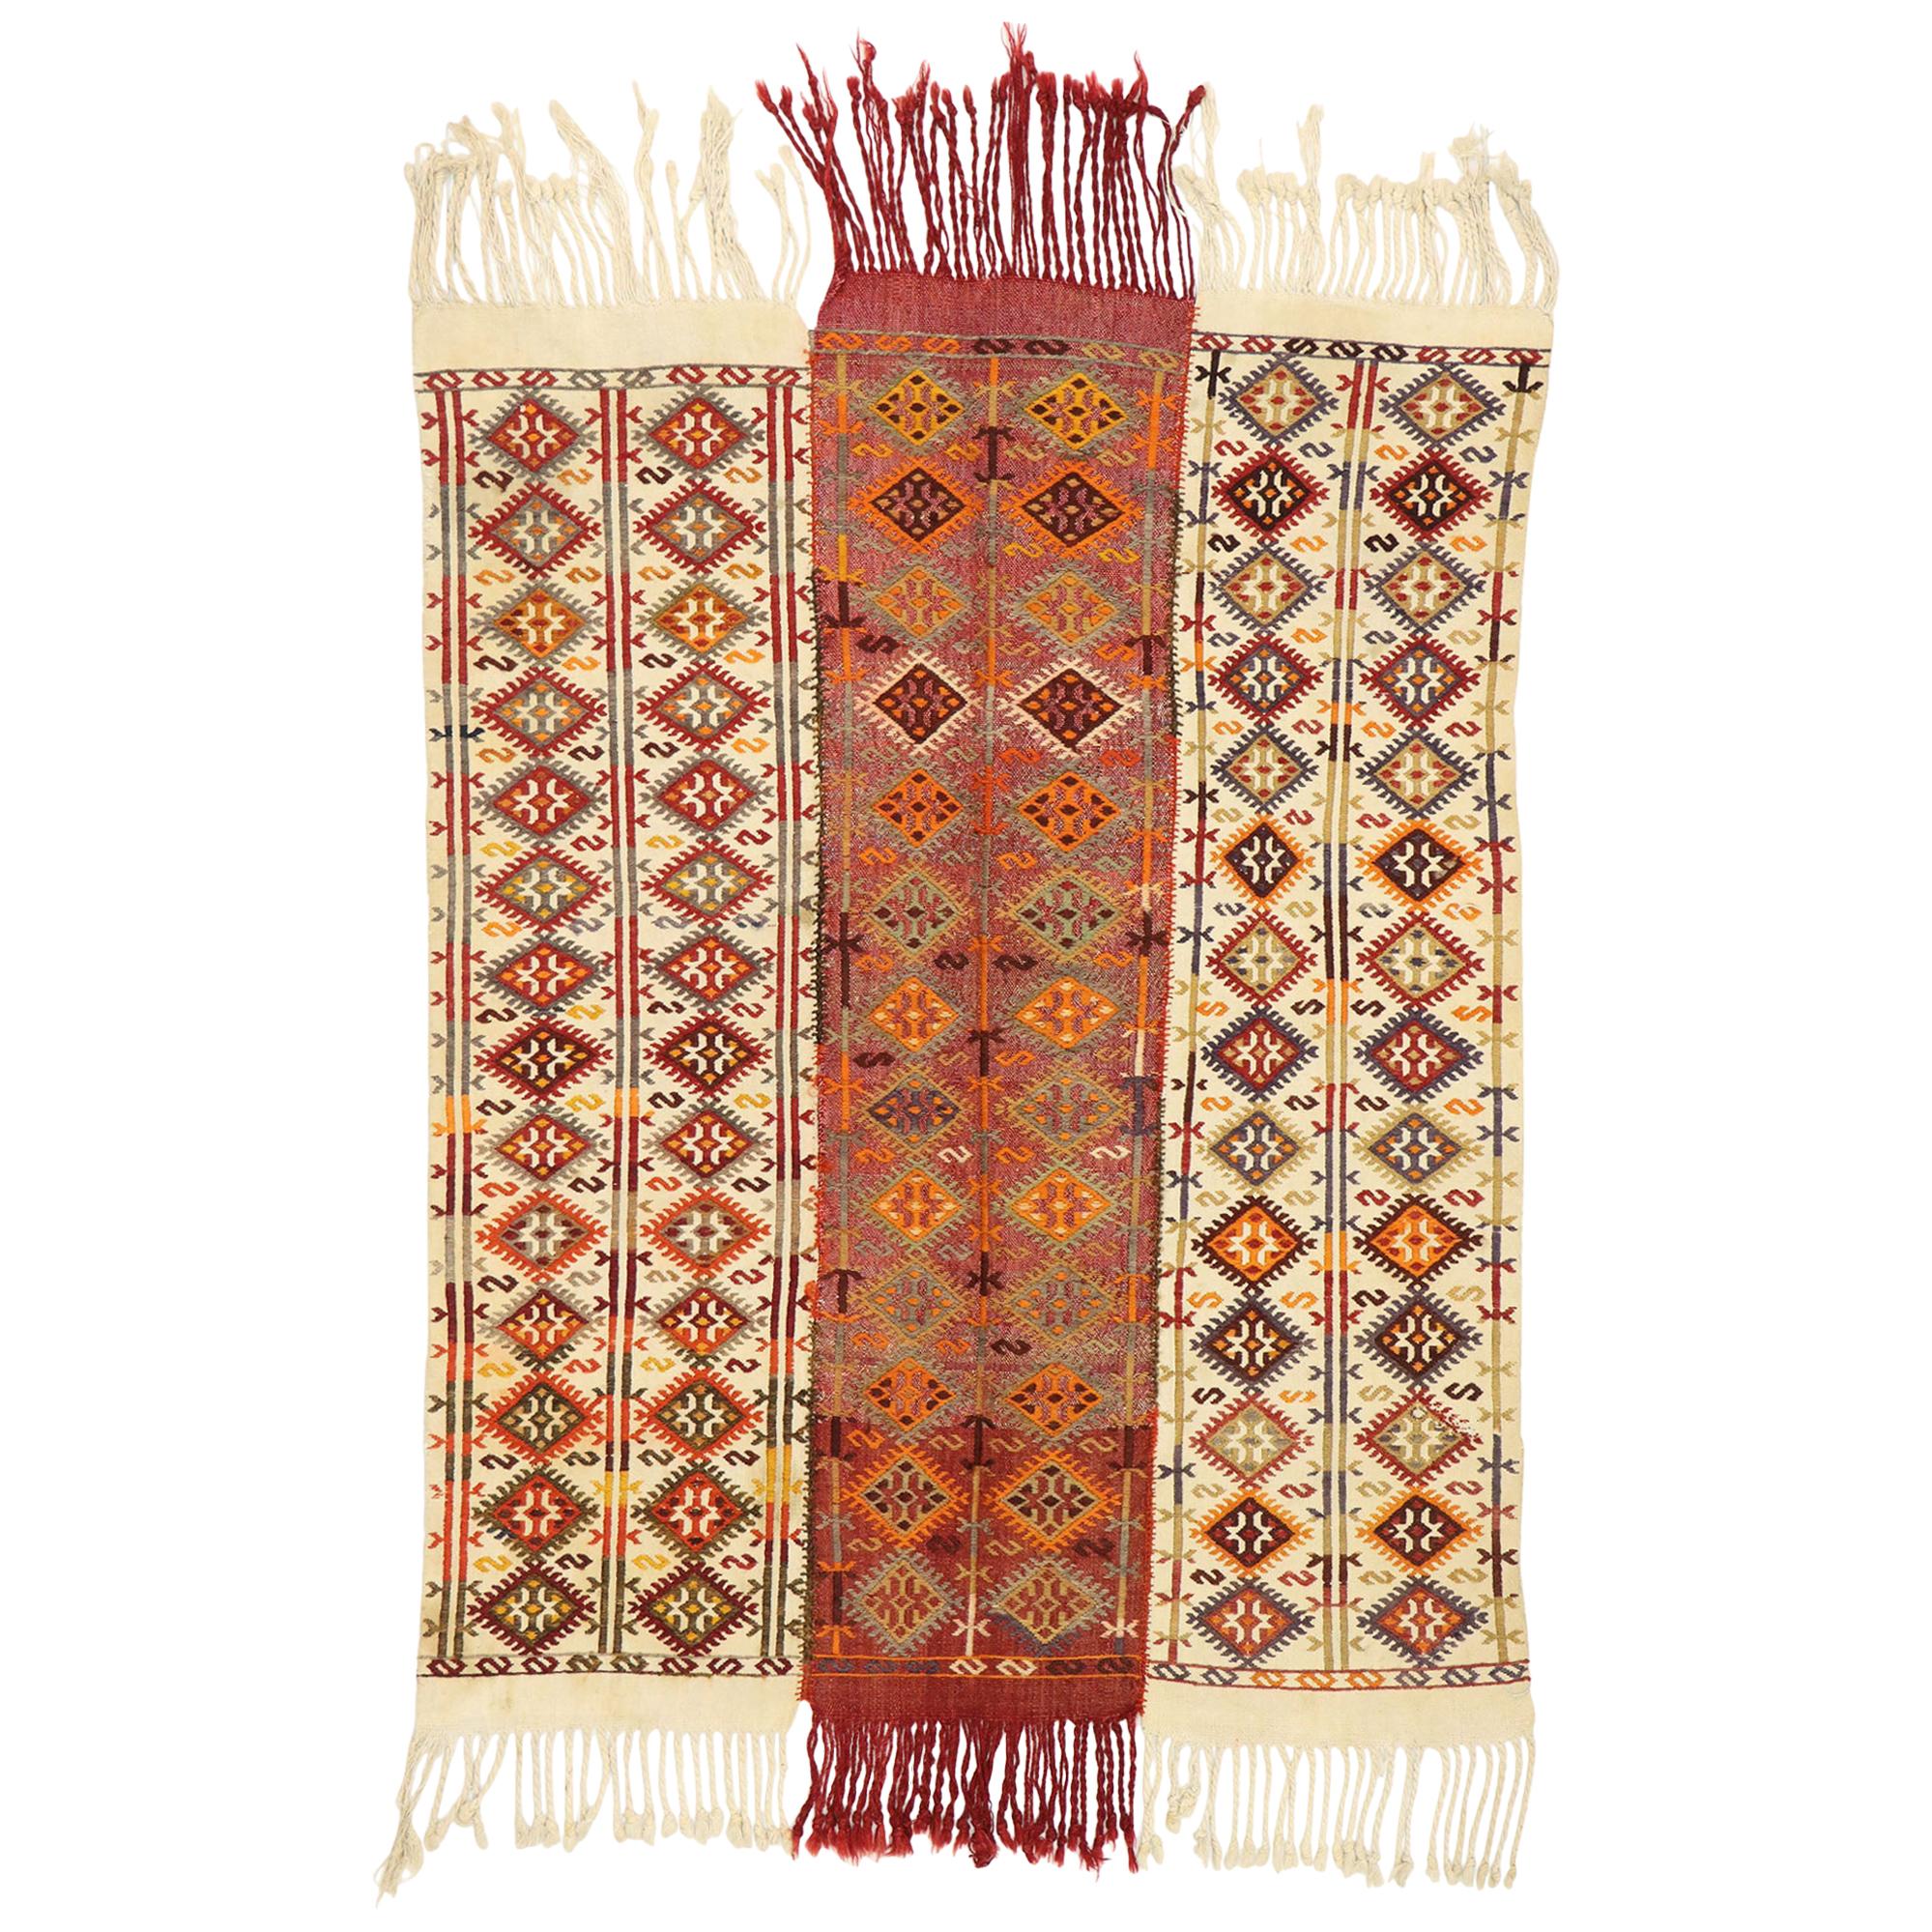 Vintage Turkish Kilim Rug with Pacific Northwest Tribal Boho Chic Style